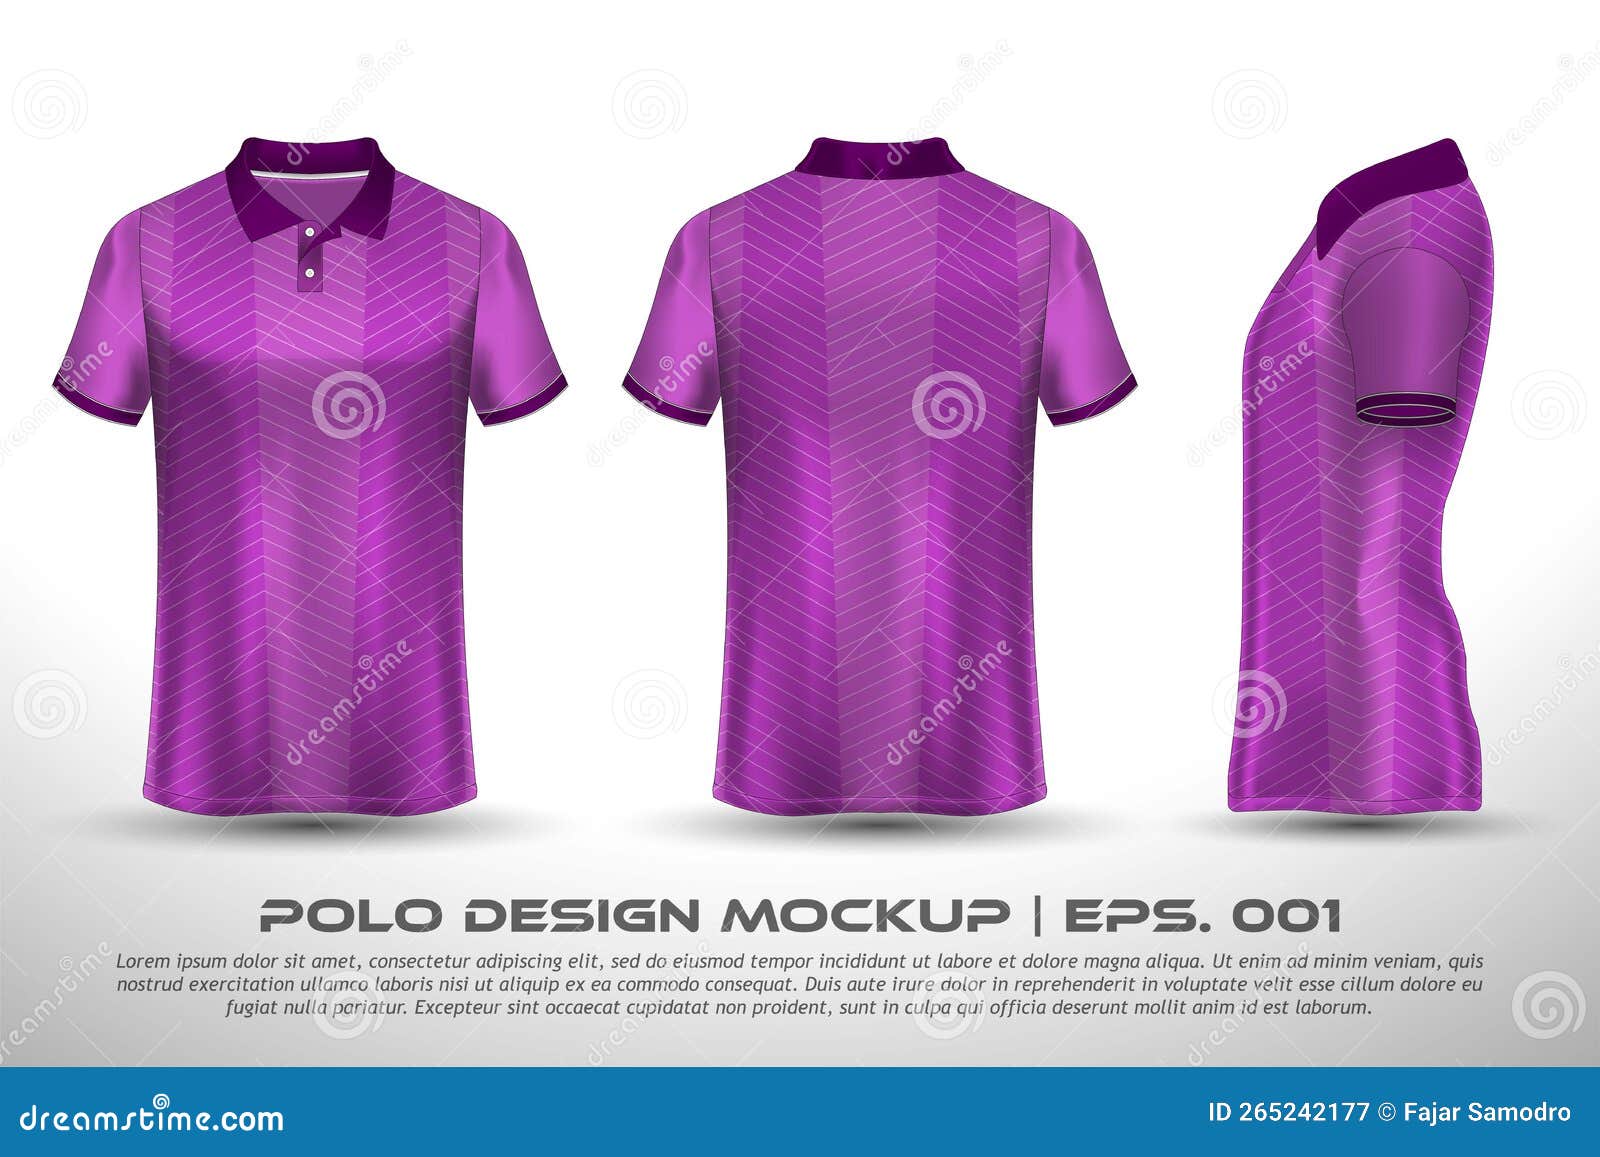 Premium Vector  Sports blue pink jersey template sport t shirt sublimation  design